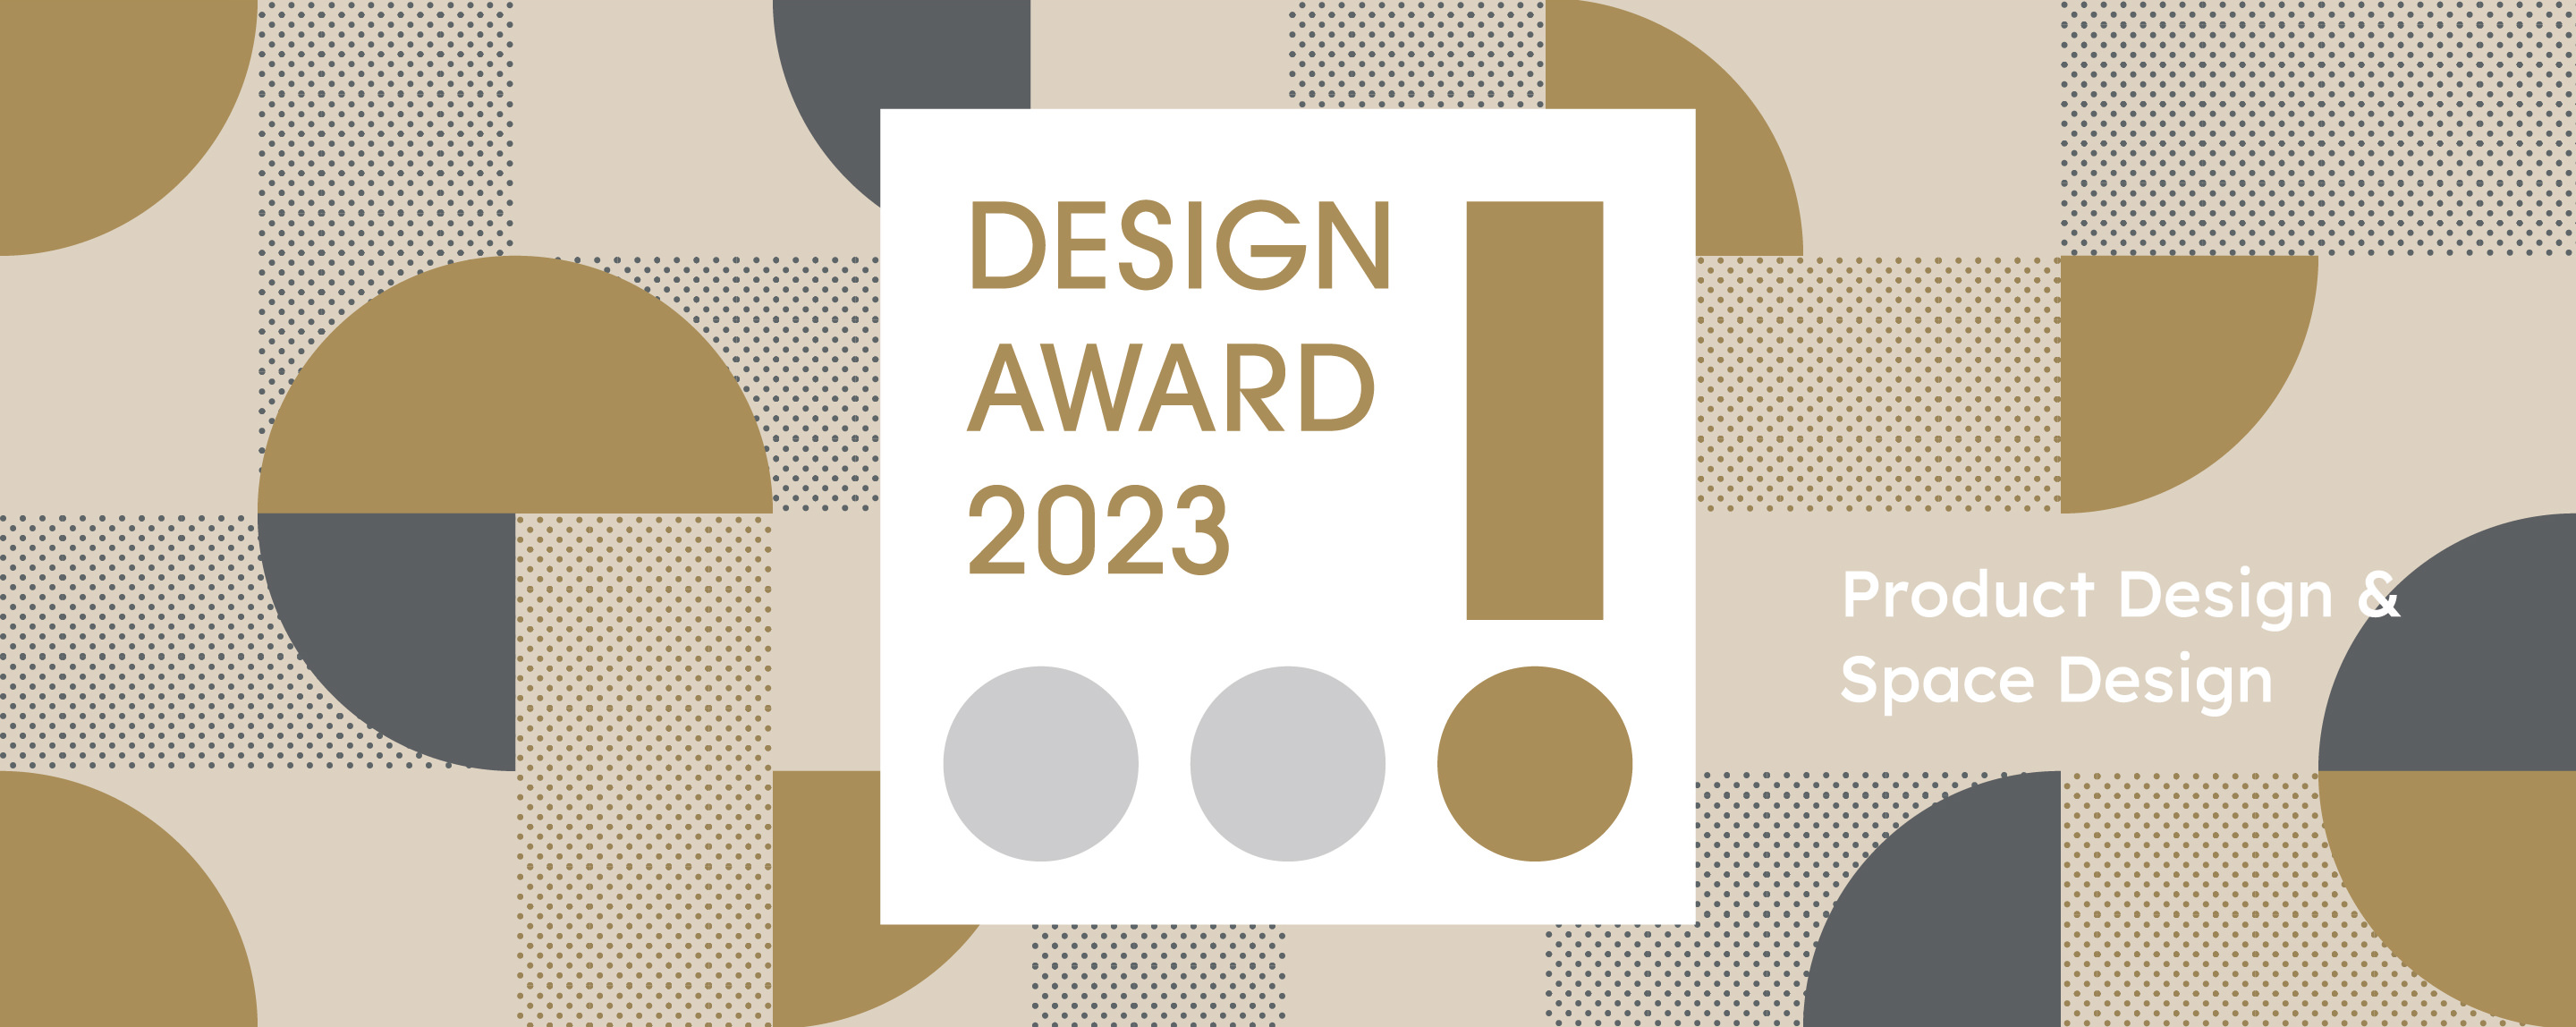 DESIGN AWARD 2023 Product Design & Space Design